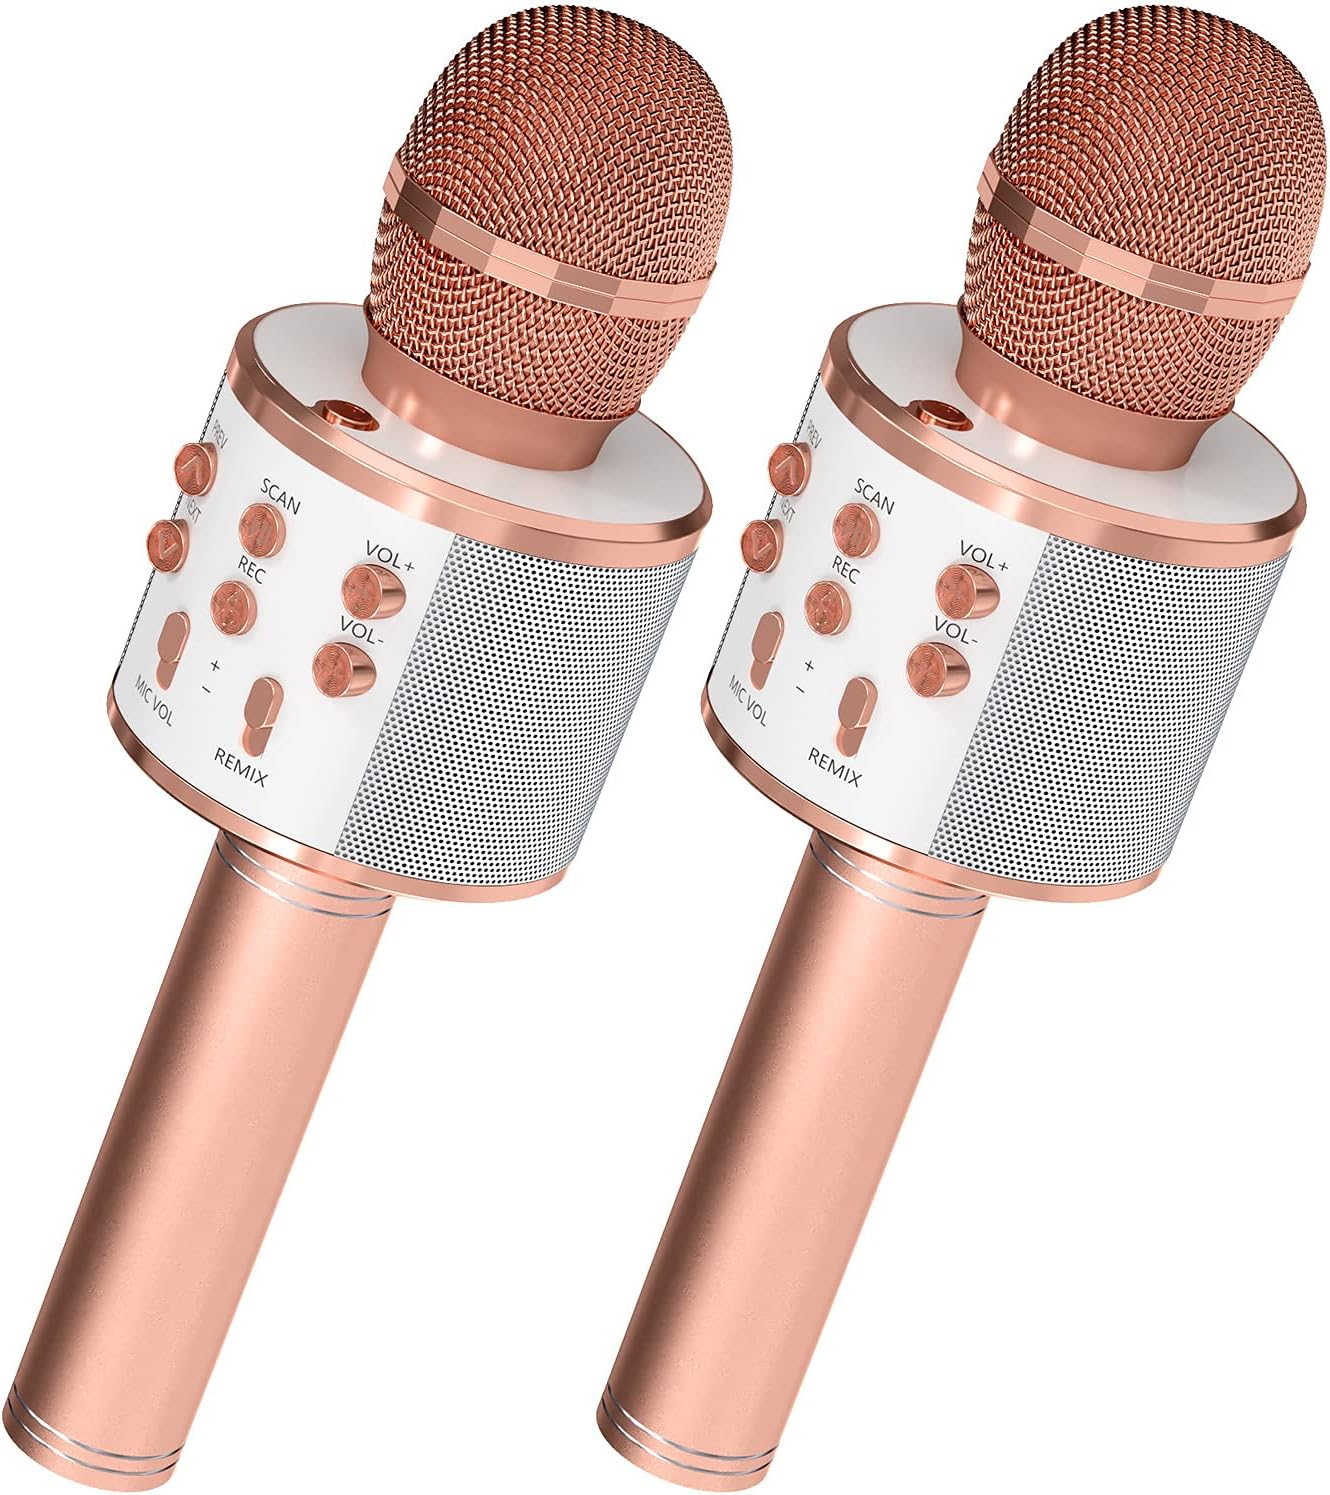 🥳​ Micrófono Karaoke Bluetooth WS-858